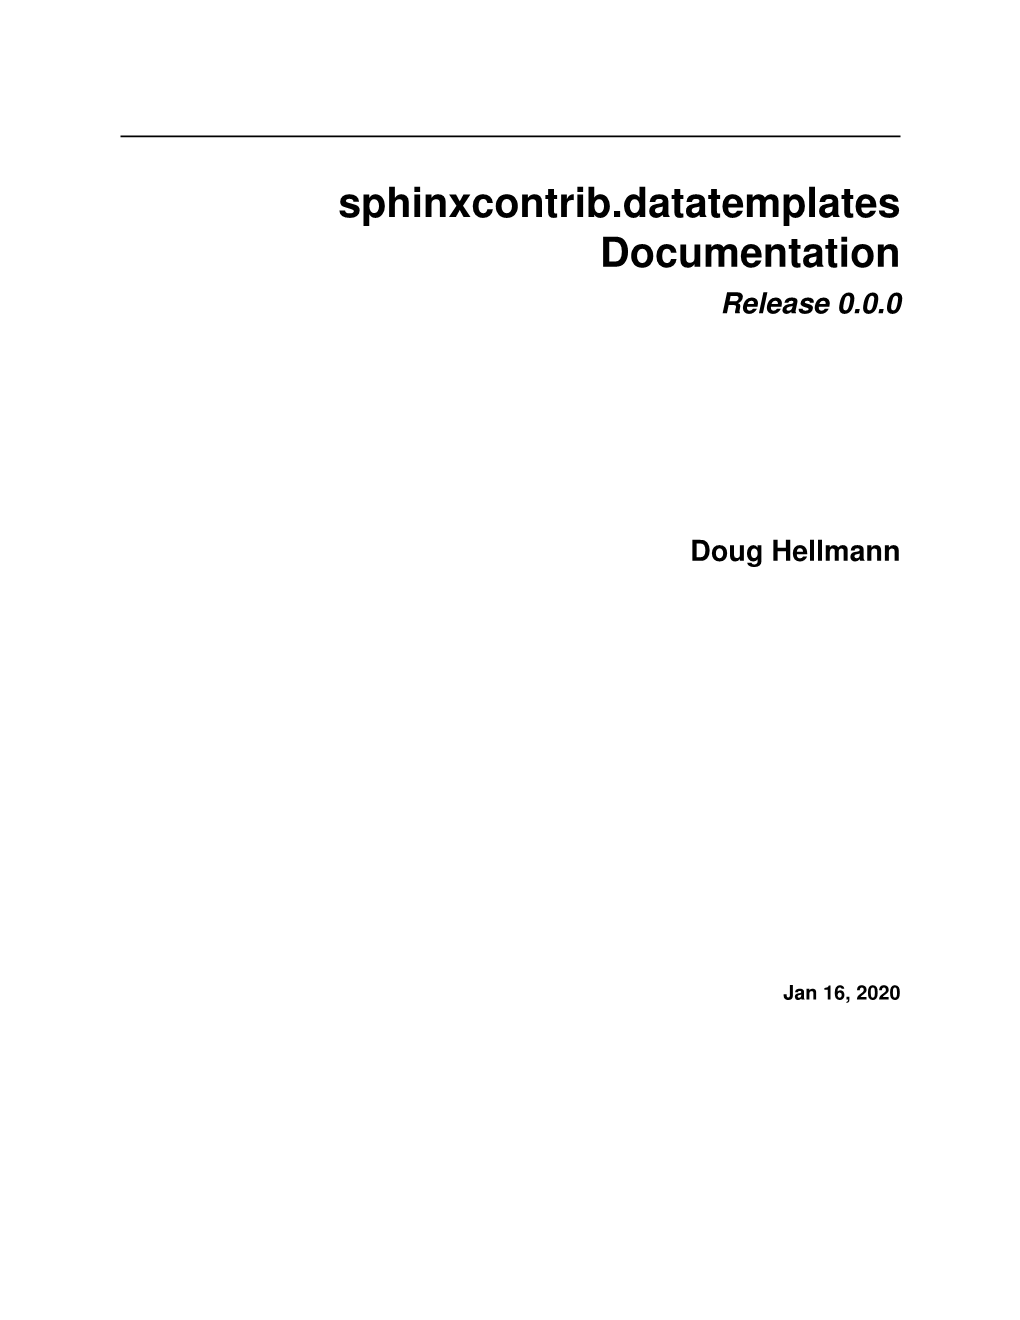 Sphinxcontrib.Datatemplates Documentation Release 0.0.0